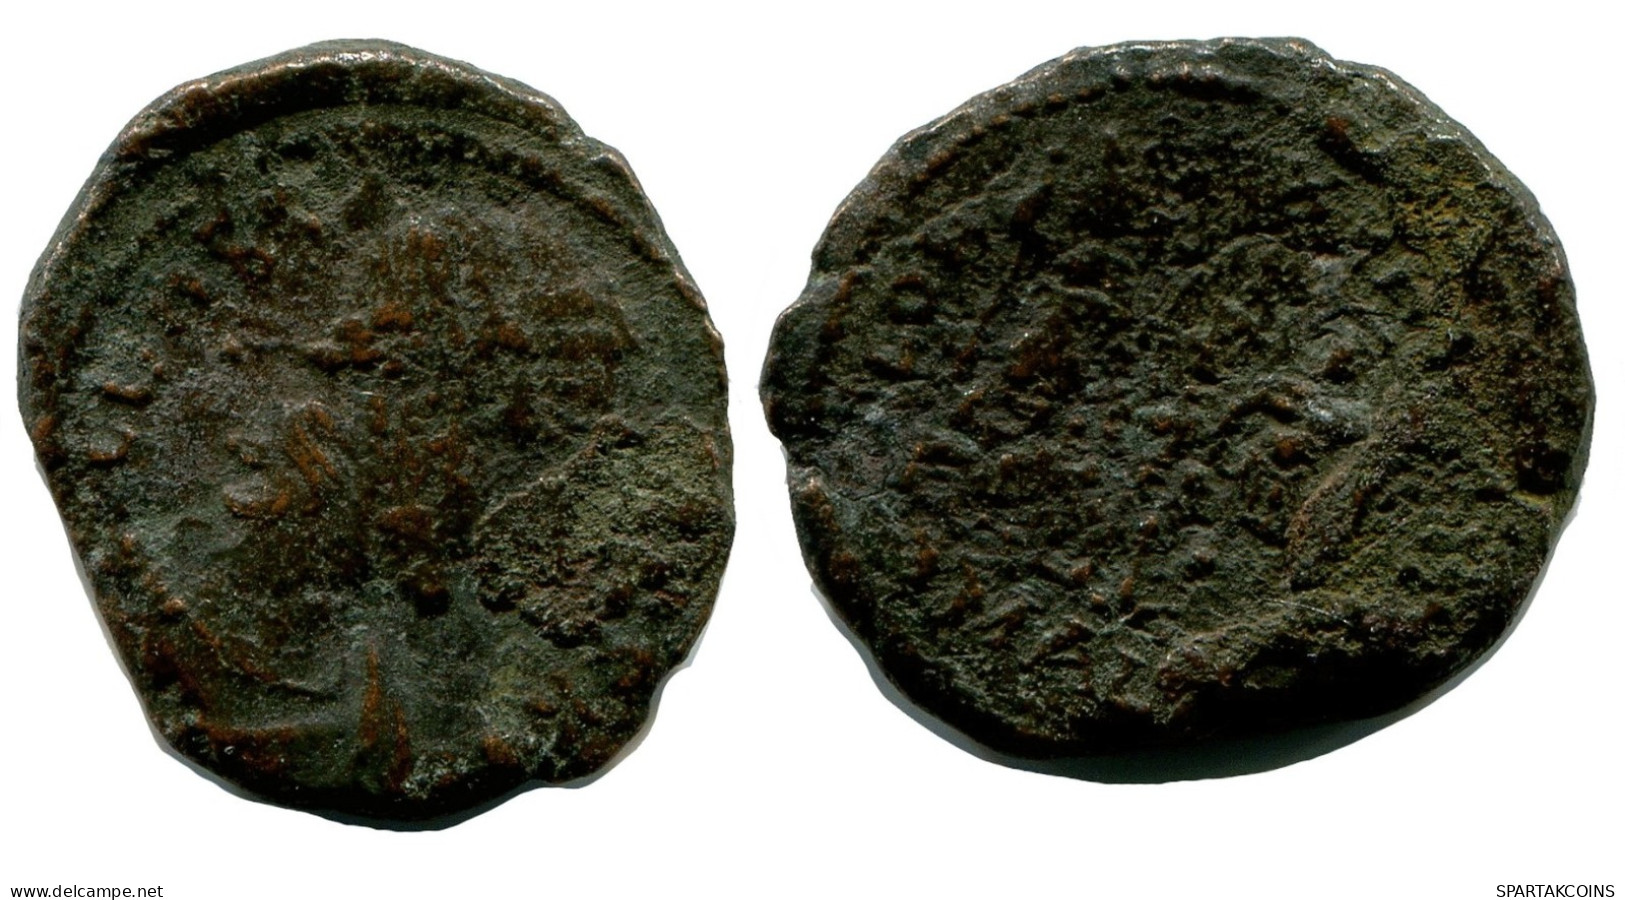 ROMAN Coin MINTED IN ALEKSANDRIA FOUND IN IHNASYAH HOARD EGYPT #ANC10176.14.U.A - El Impero Christiano (307 / 363)